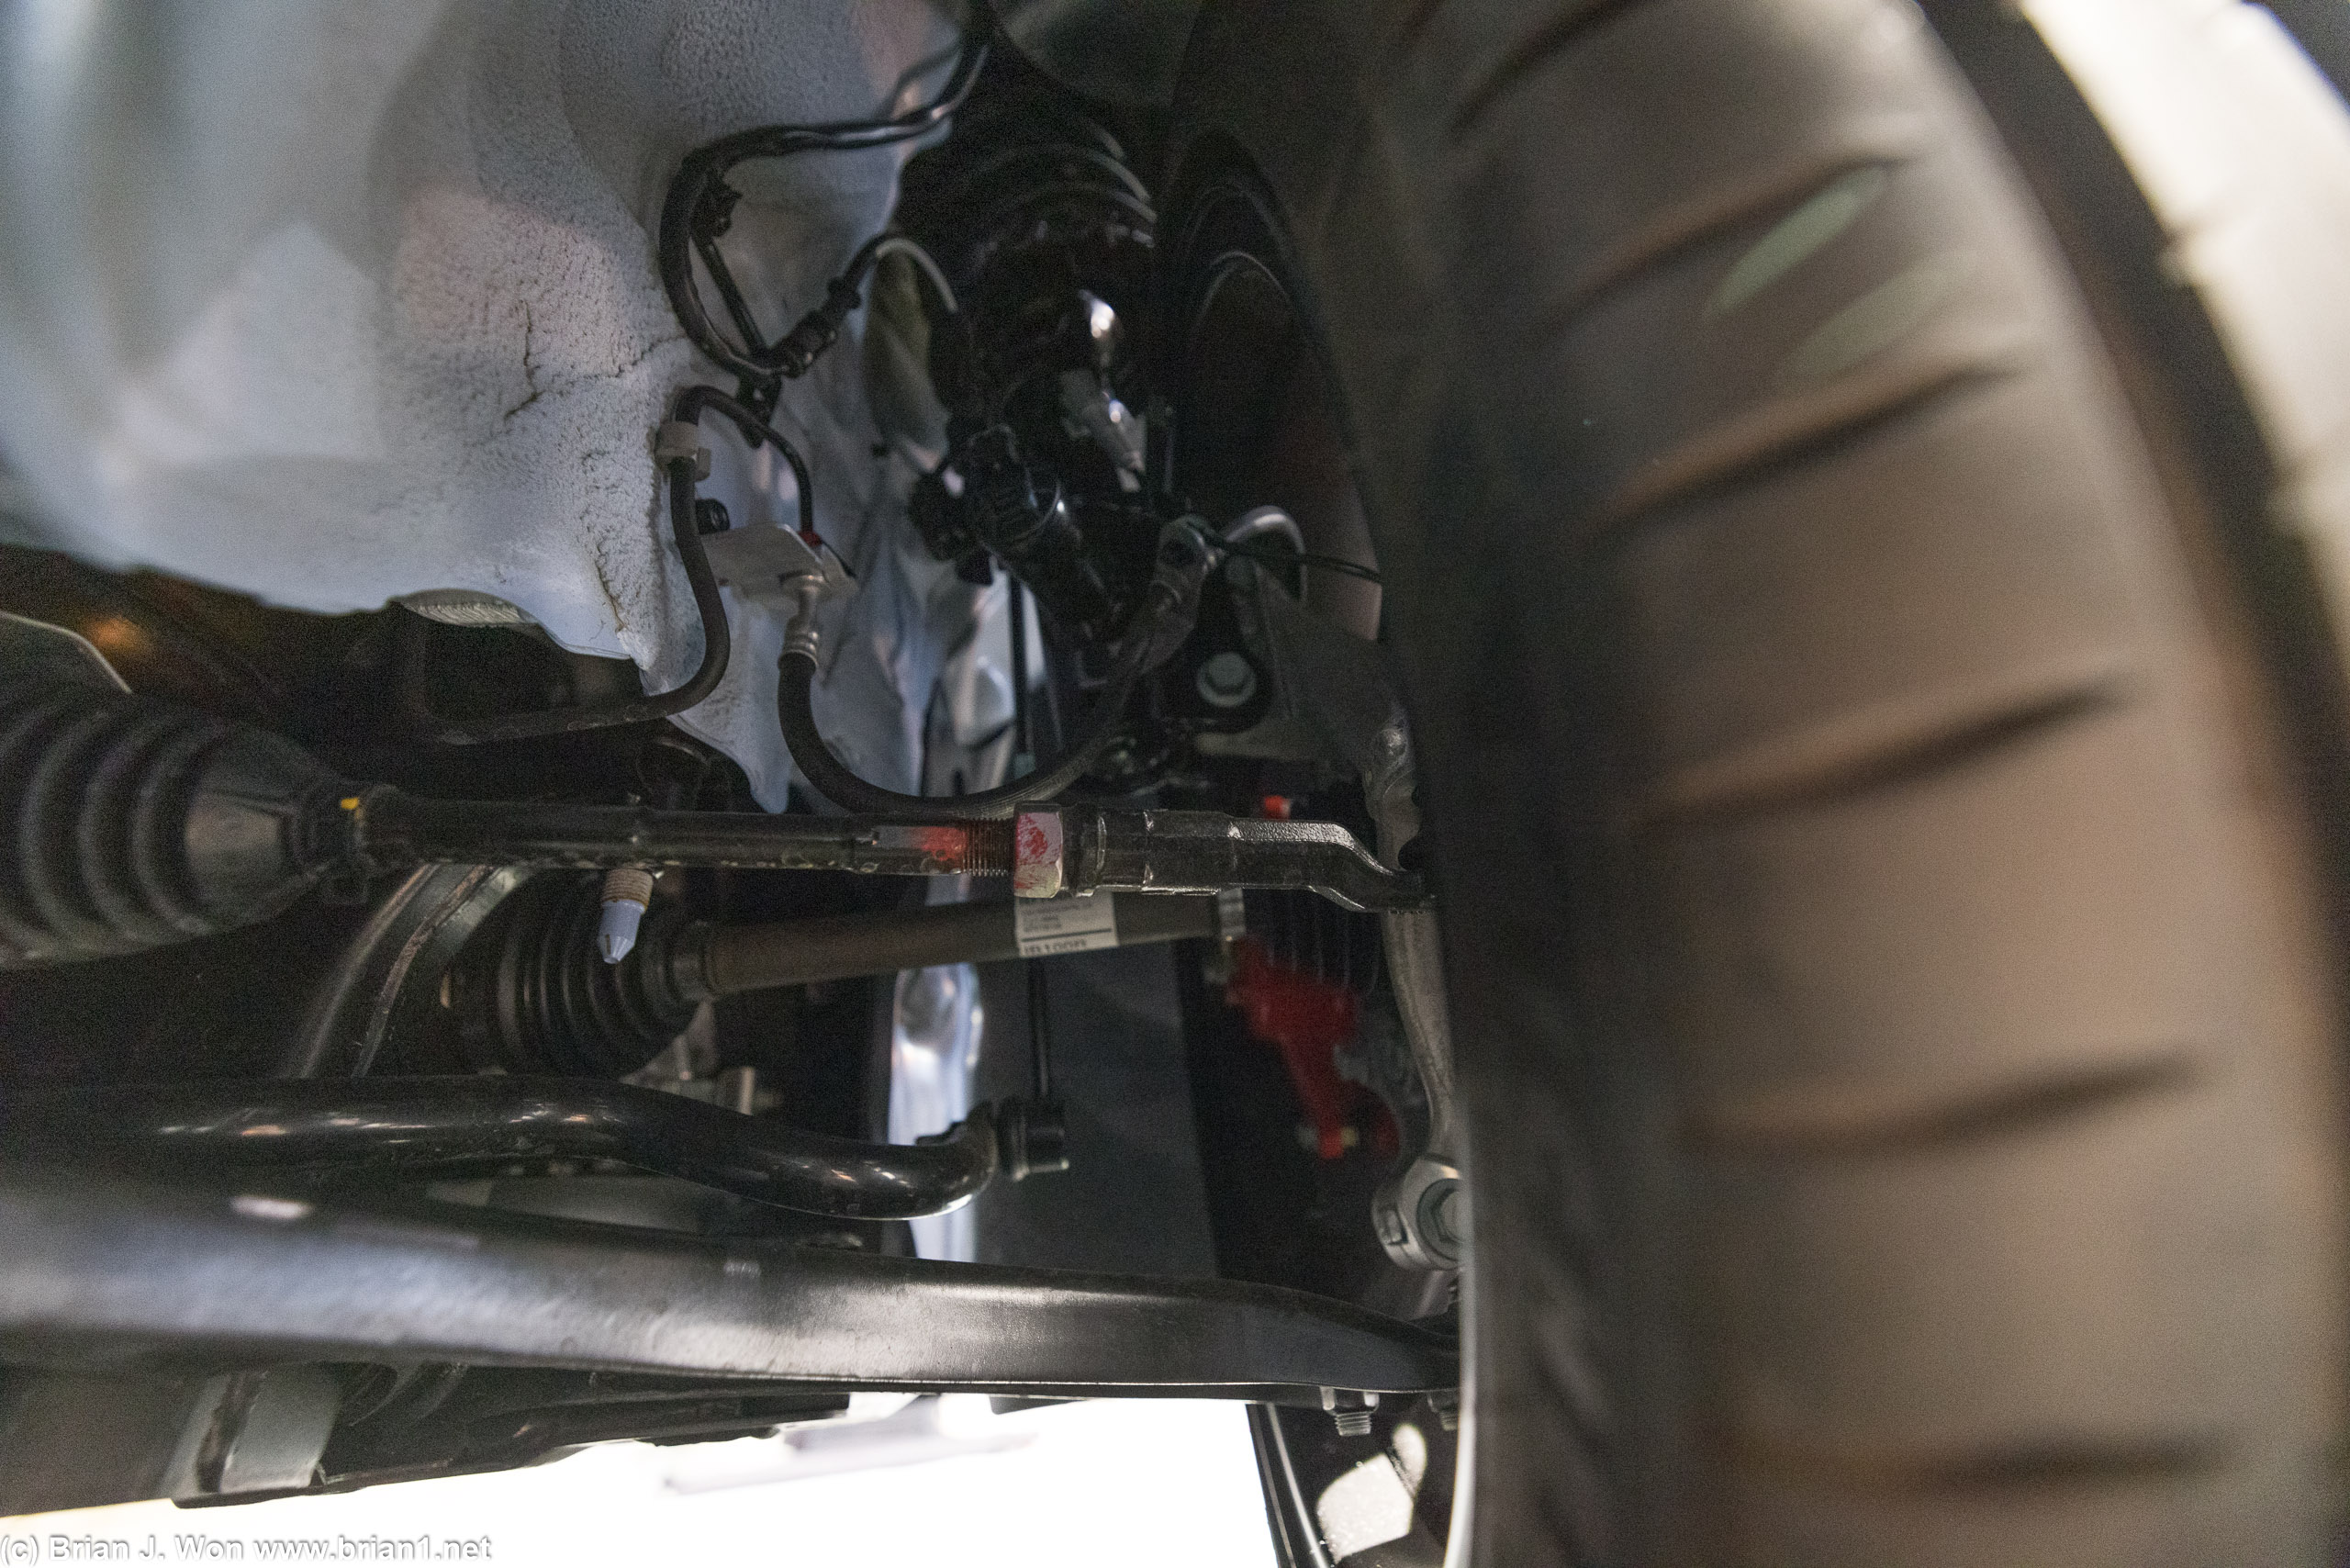 Hyundai Elantra N suspension details. Struts up front. Skinny looking CV joints.